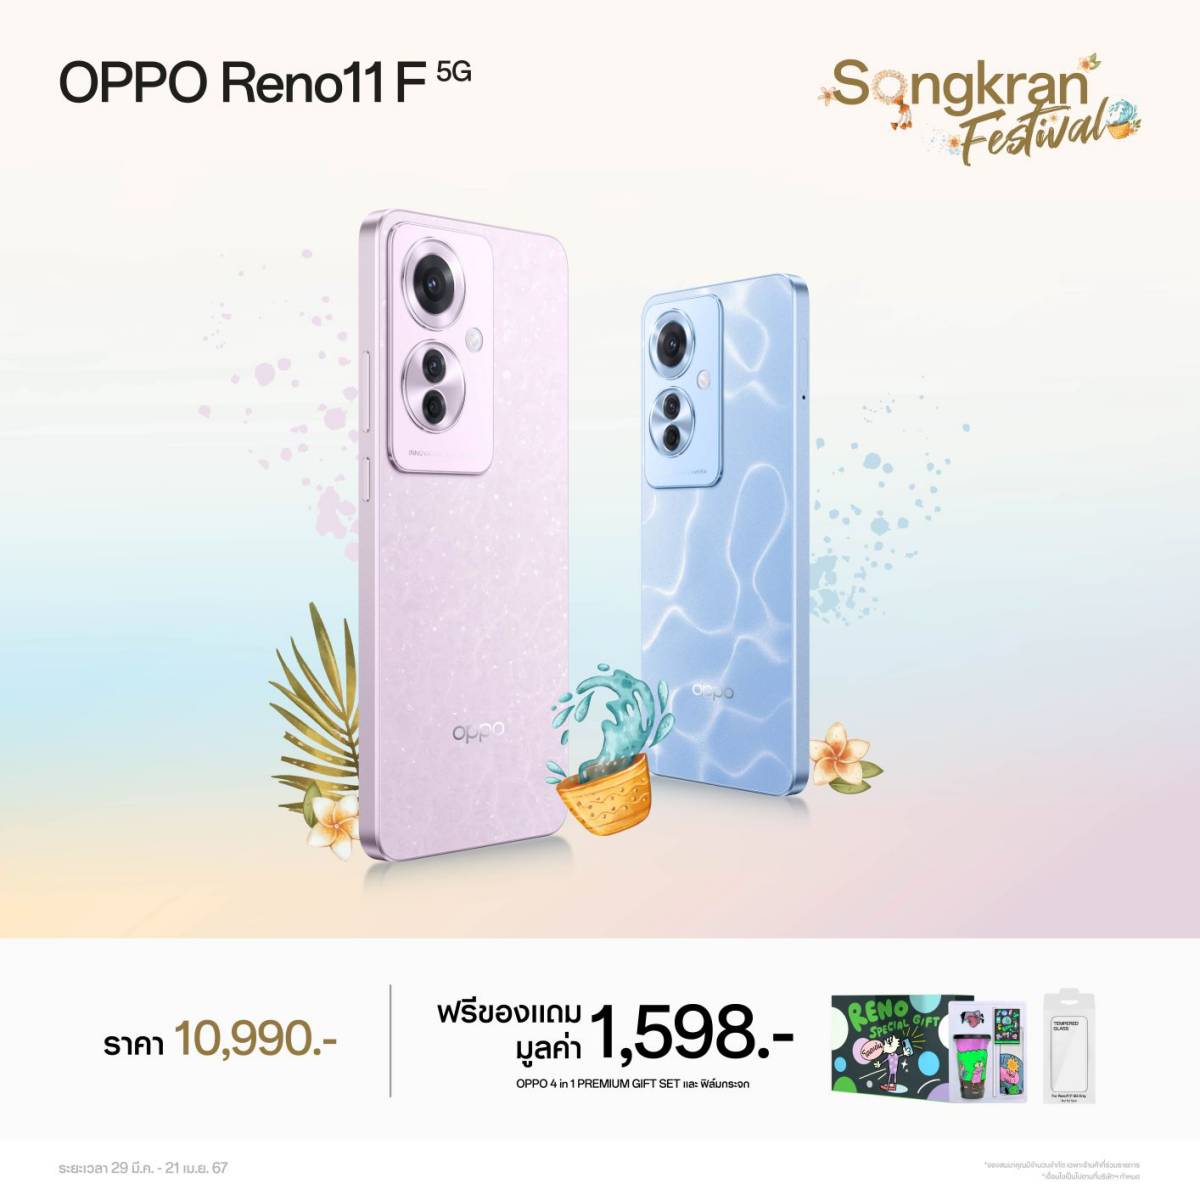 OPPO Songkran Festival - OPPO Reno11 F 5G